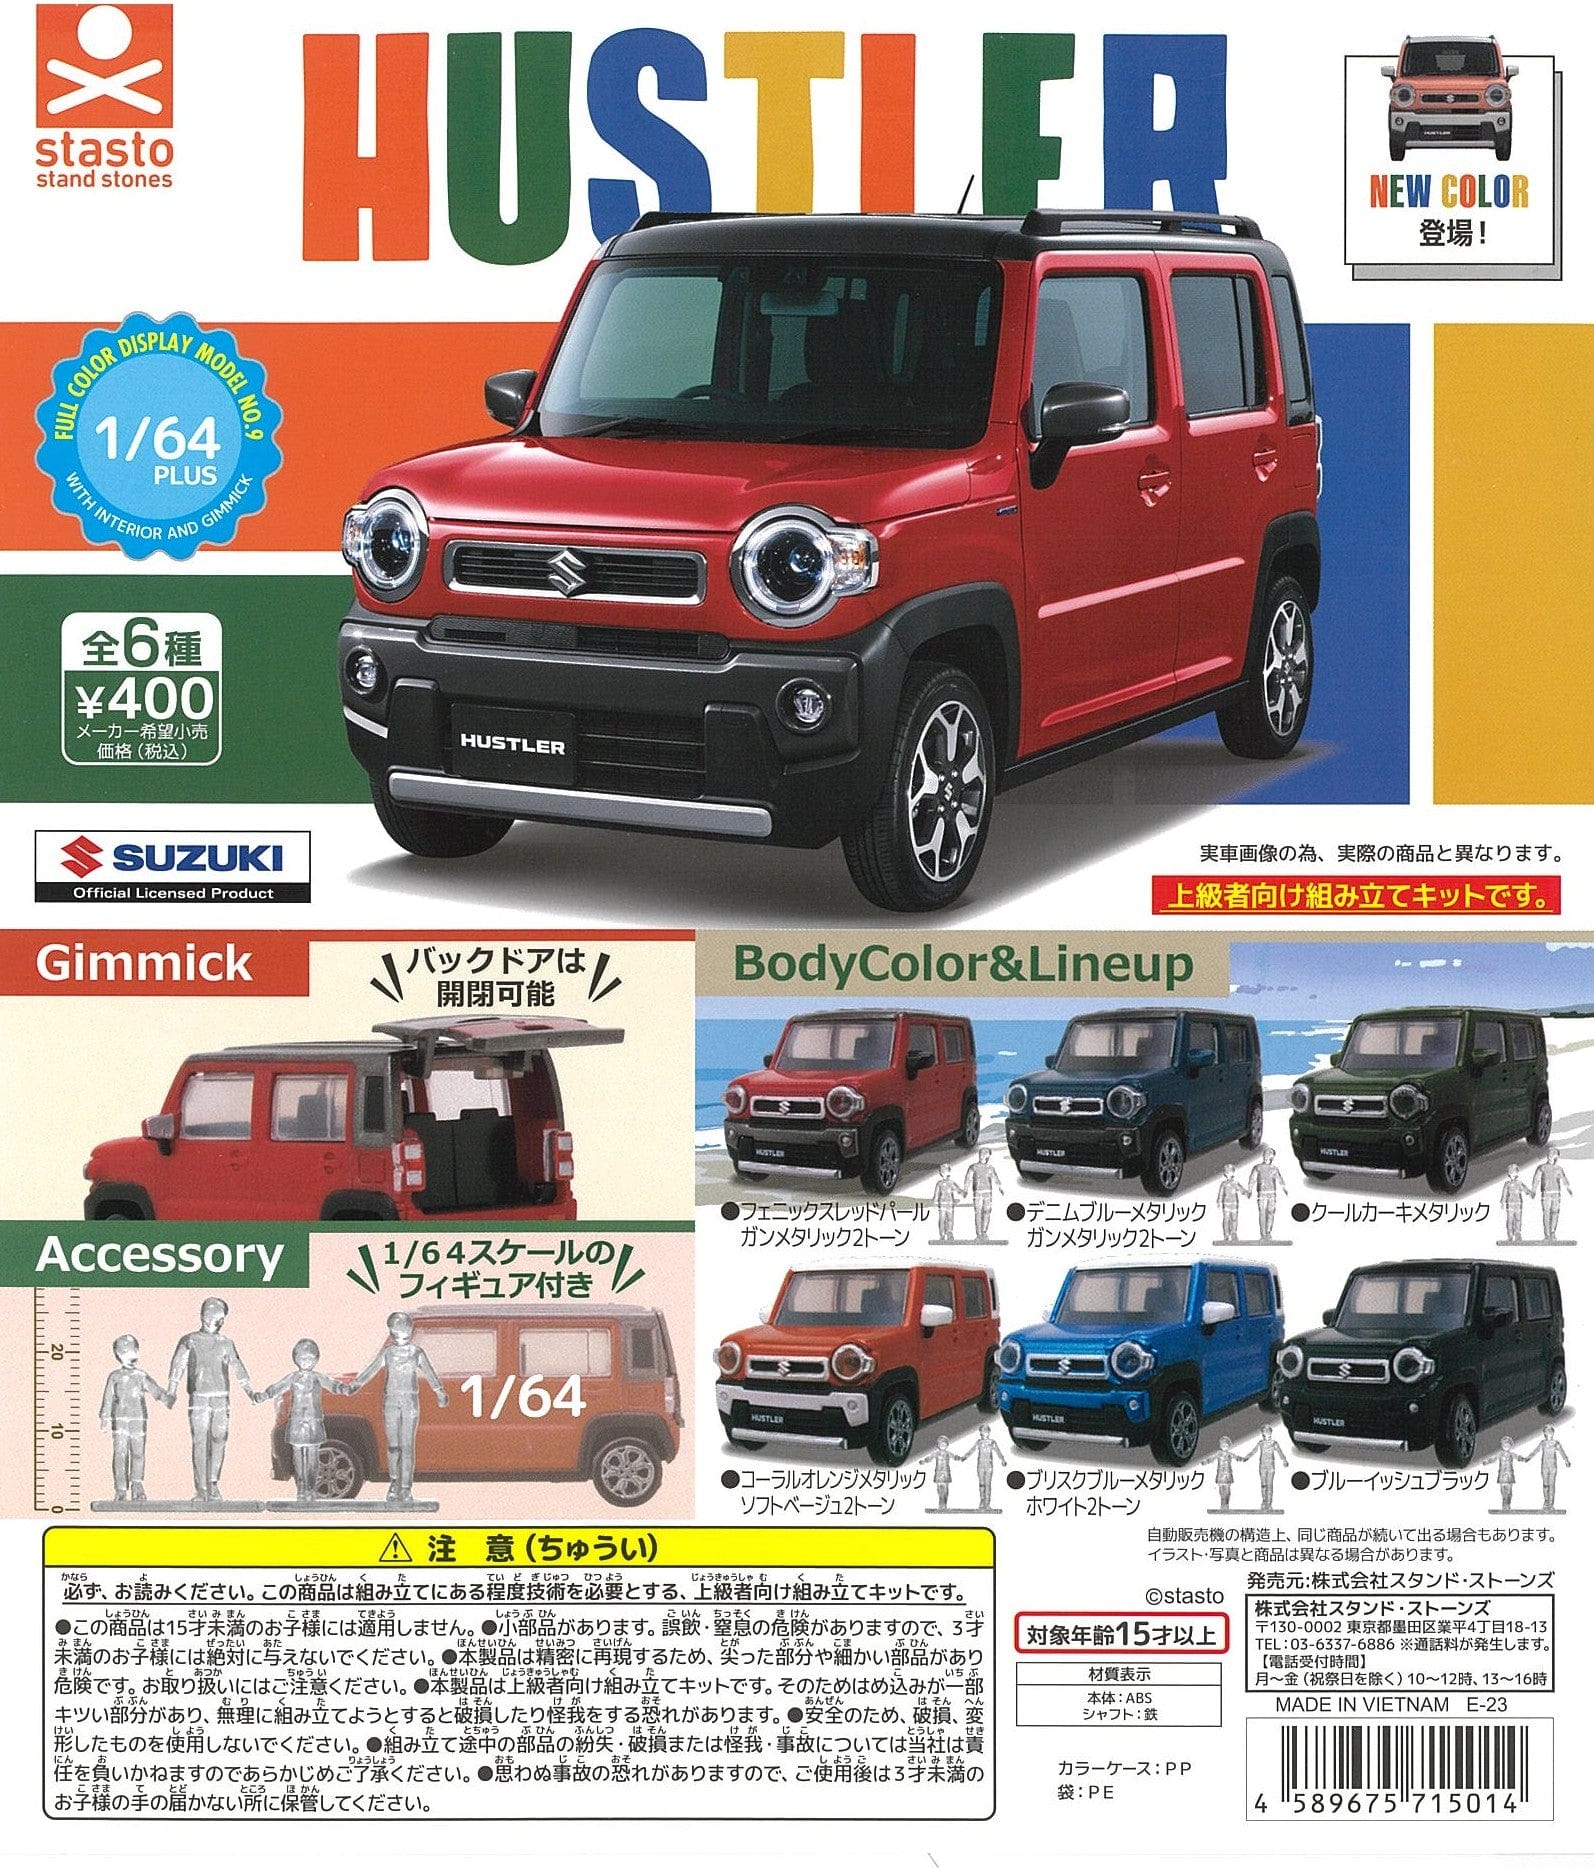 STASTO CP2323 1/64 PLUS Suzuki Hustler New Color